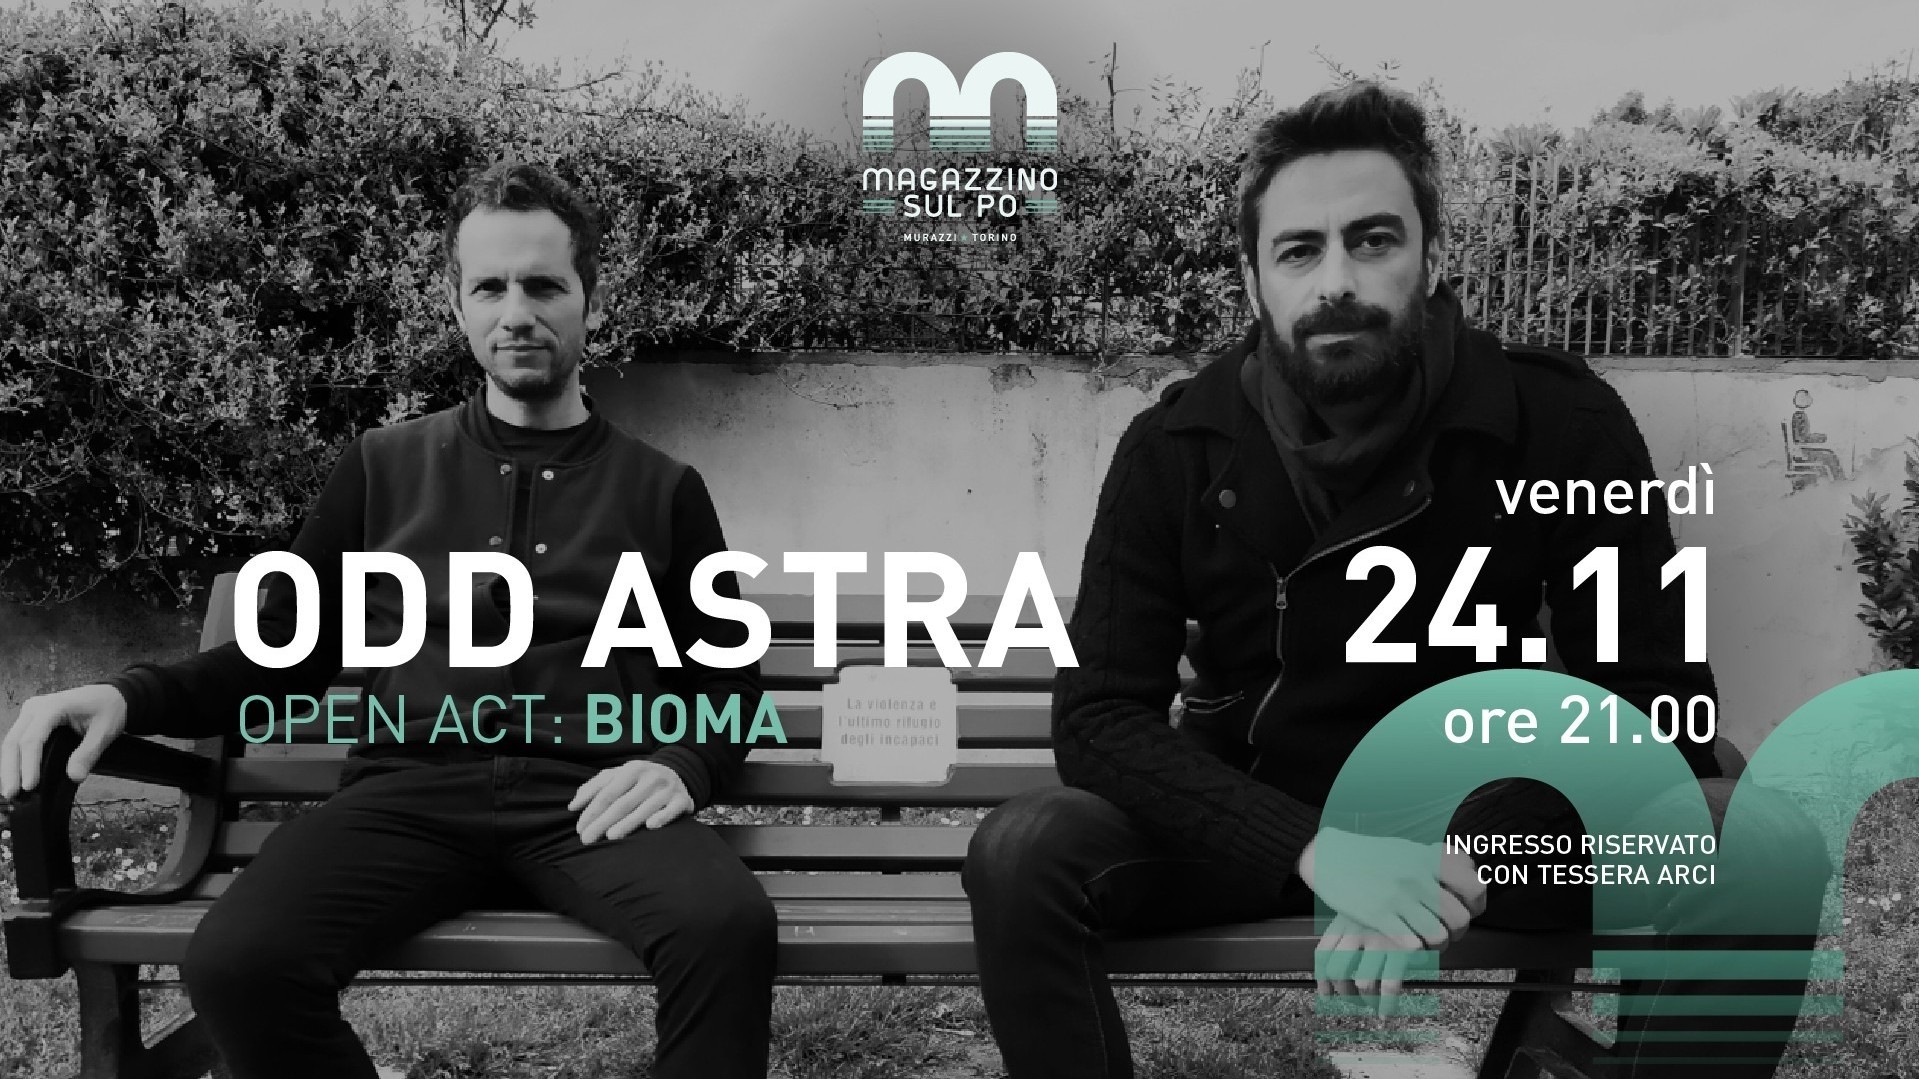 Odd Astra - open act: Bioma